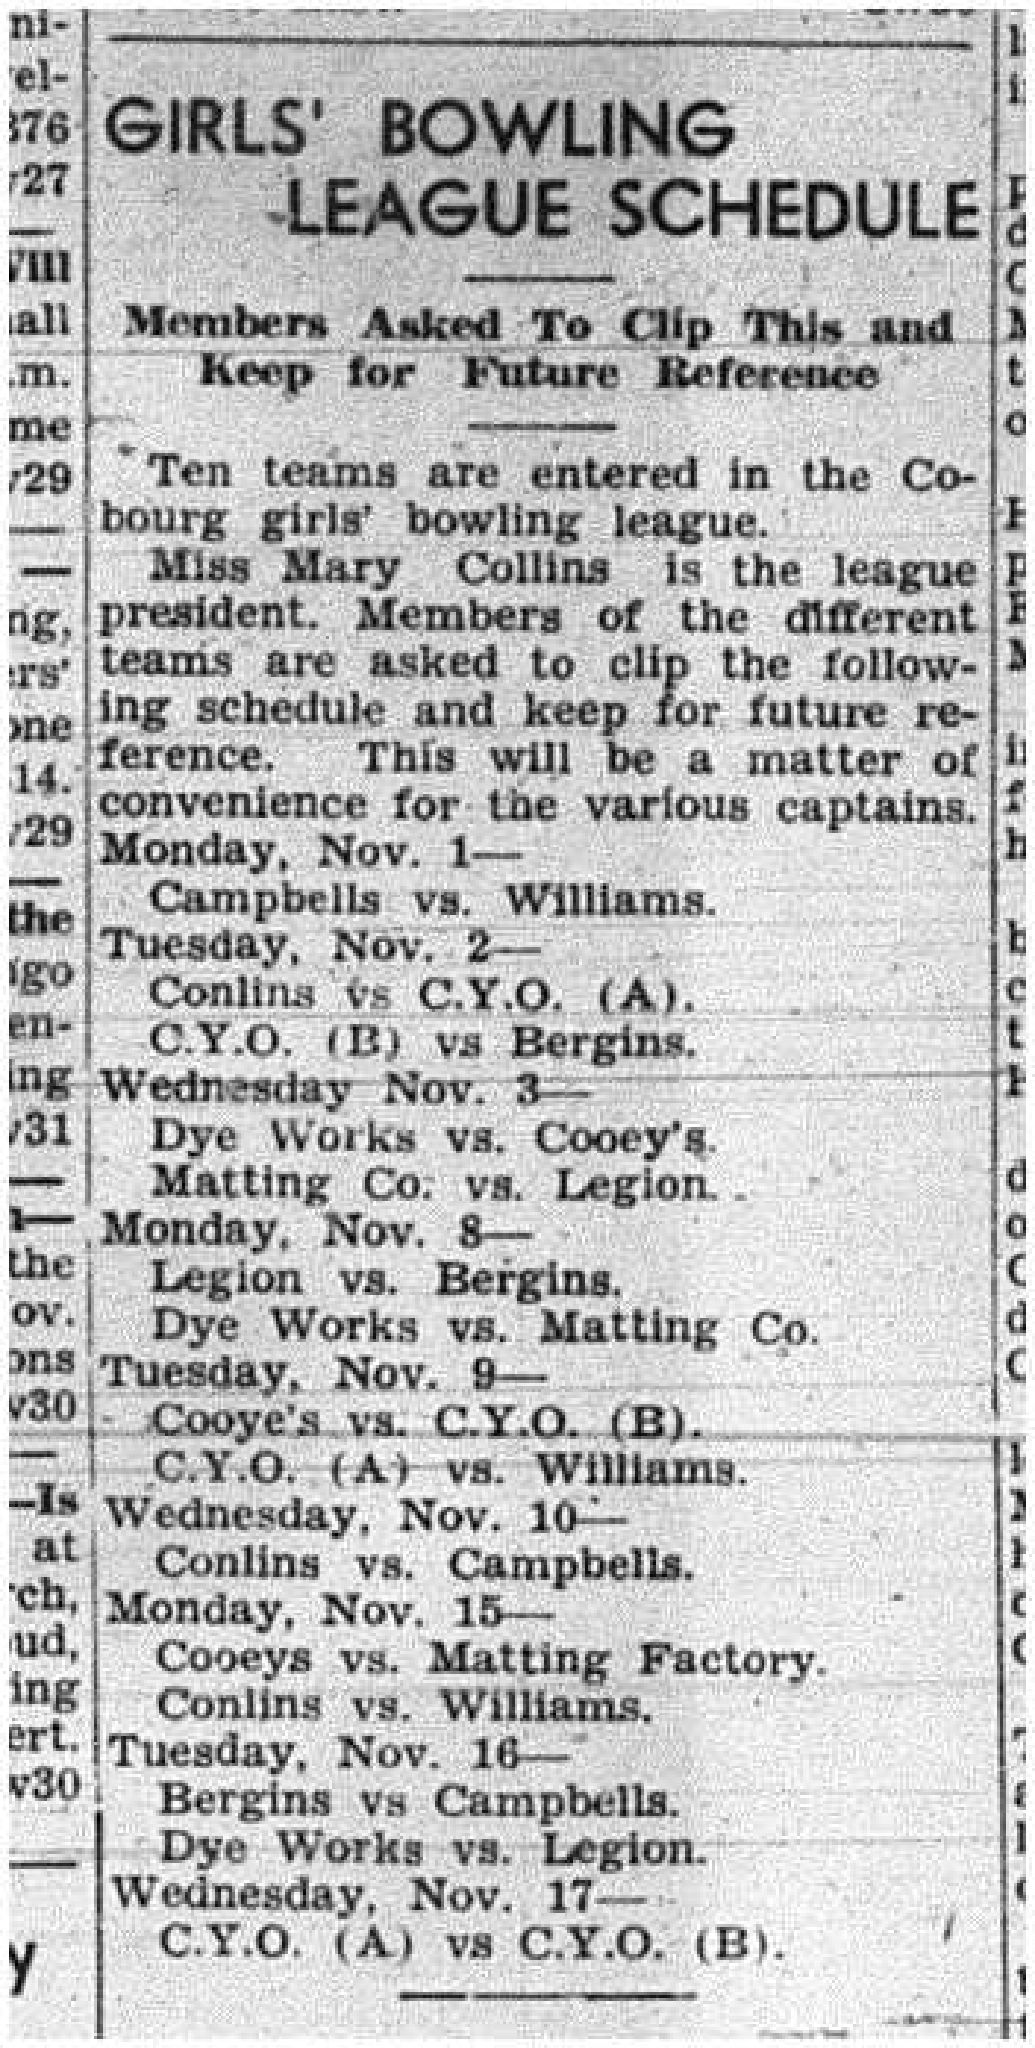 1943-10-28 Bowling - Ladies